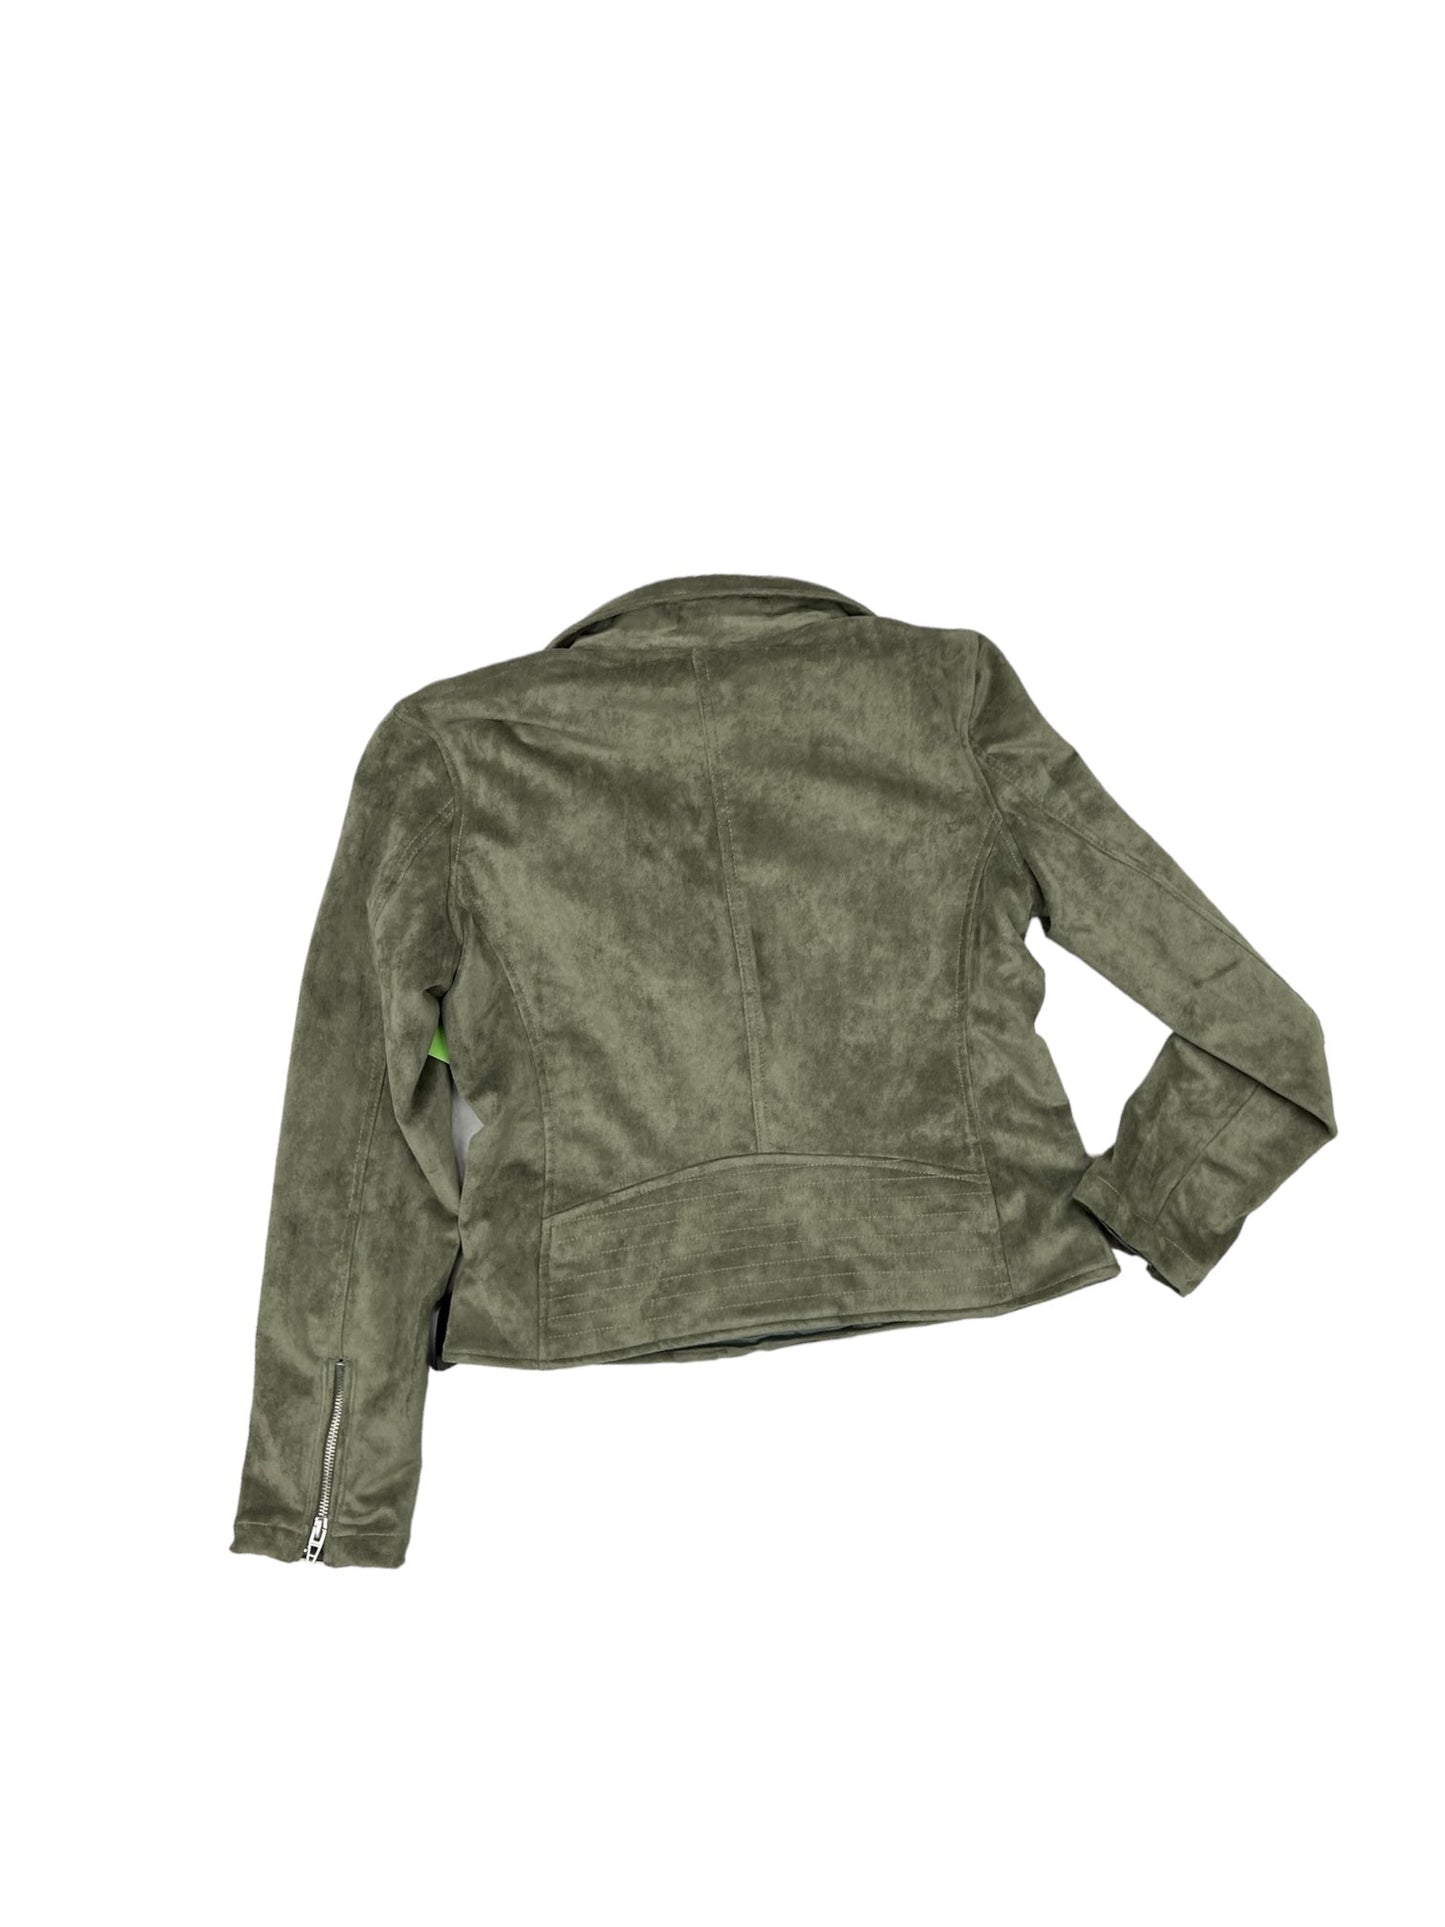 Jacket Moto By Blanknyc  Size: S